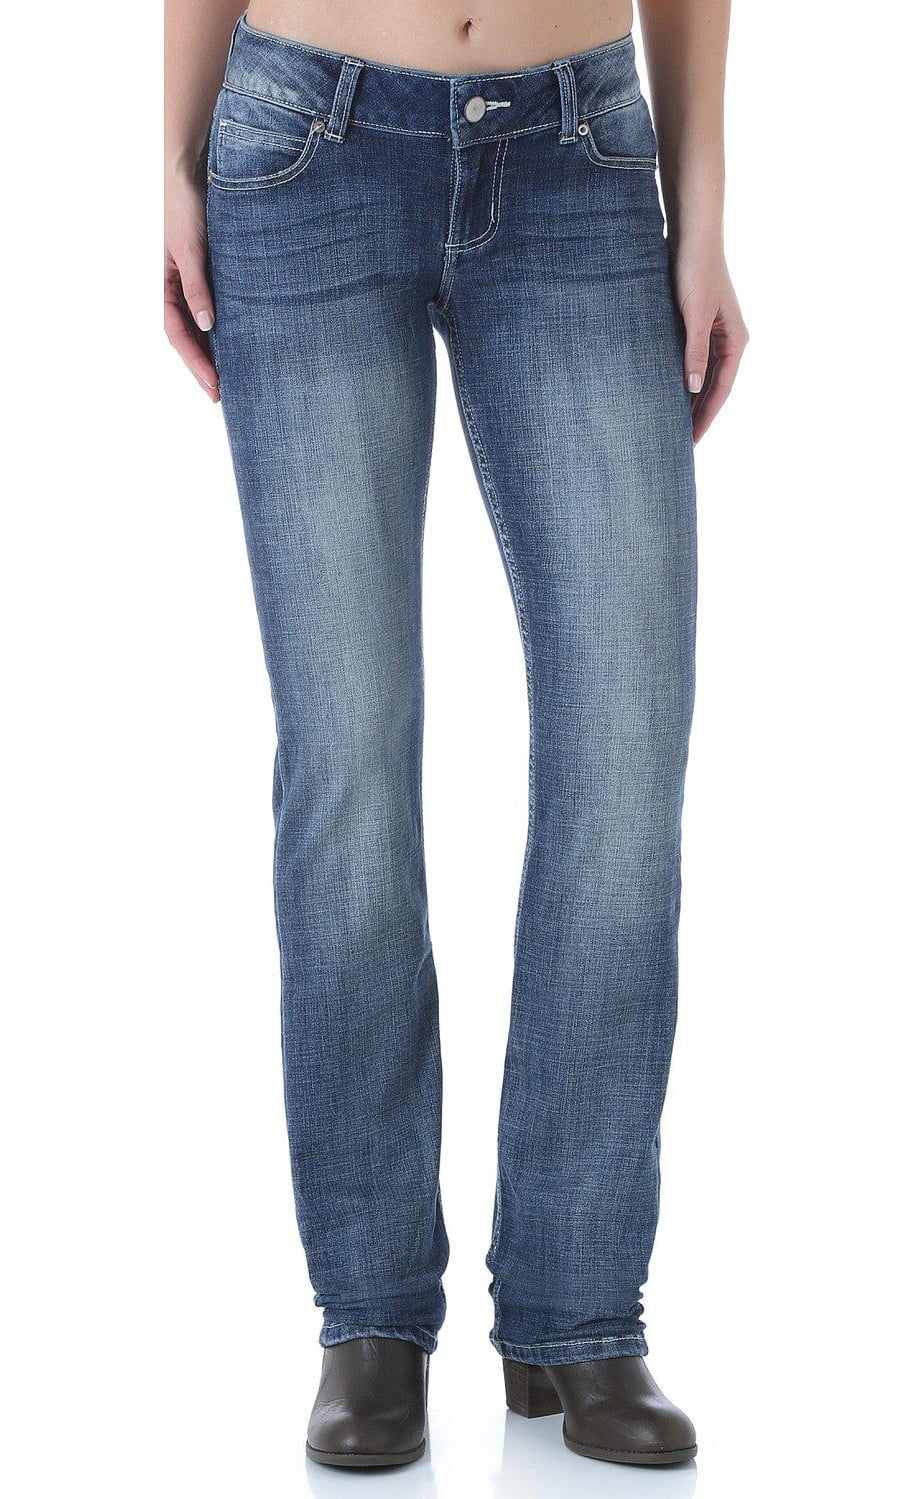 wrangler jeans wrw83rs